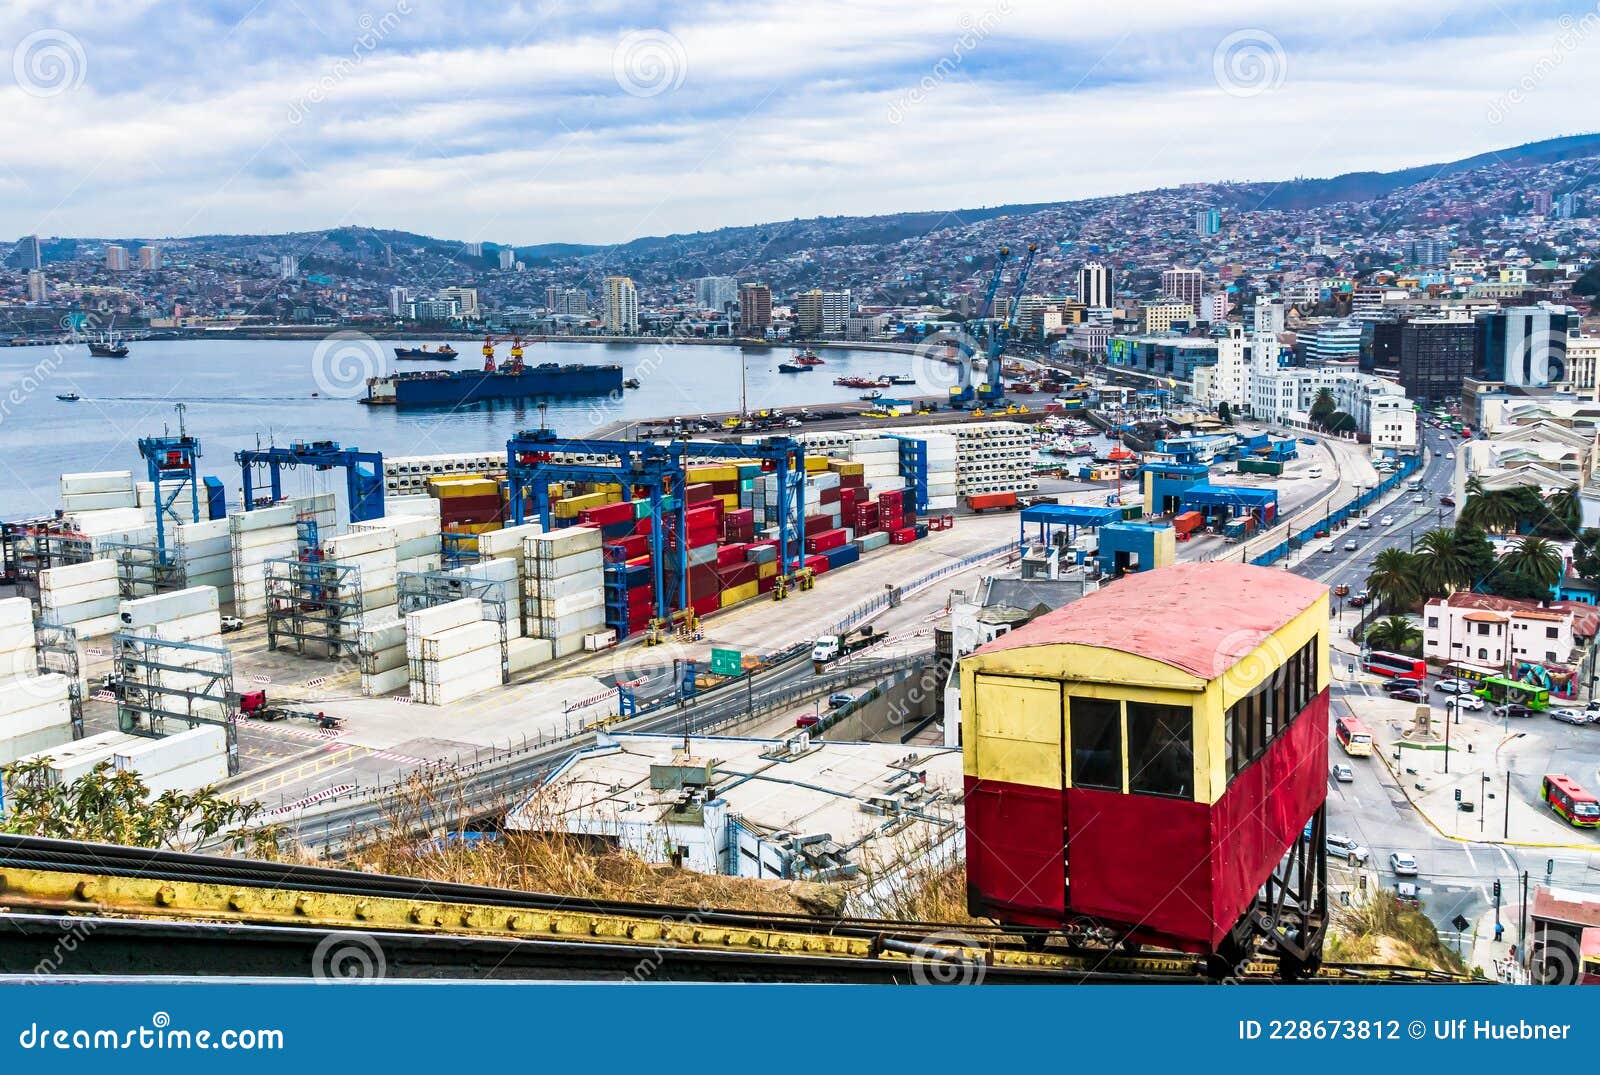 port of valparaiso and ascensor artilleria lift at cerro artilleria hill - valparaiso, chile